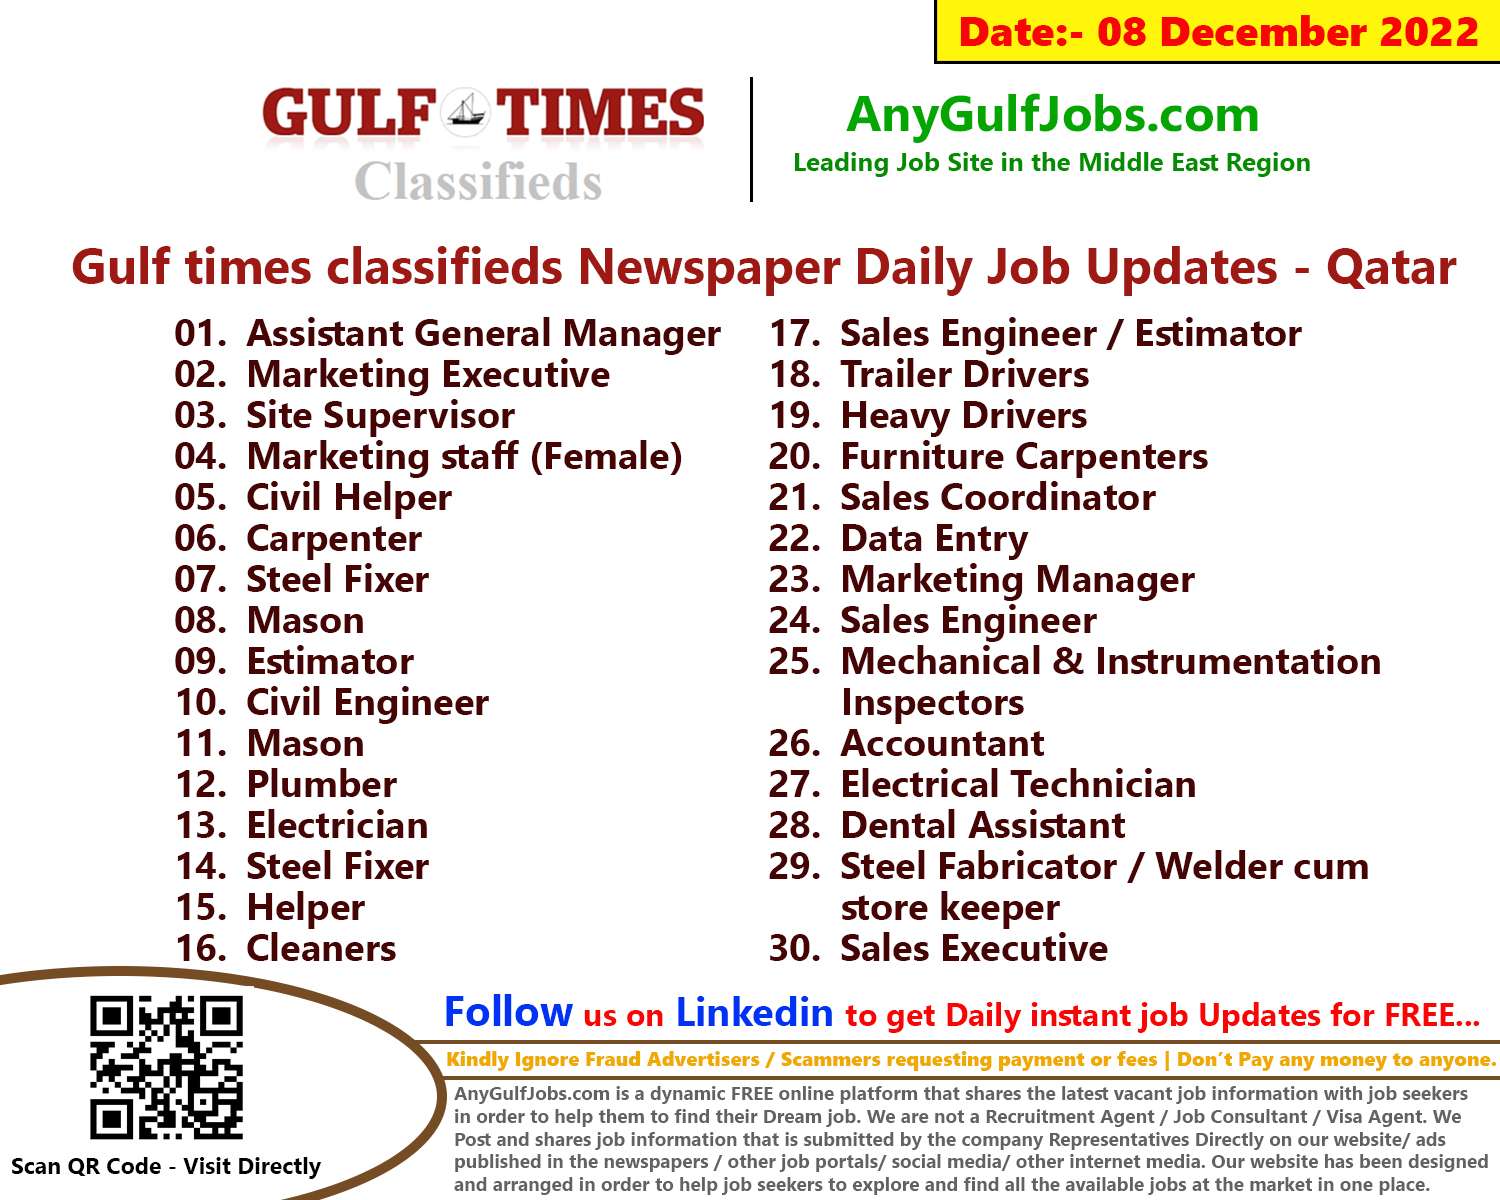 Gulf times classifieds Job Vacancies Qatar - 08 December 2022